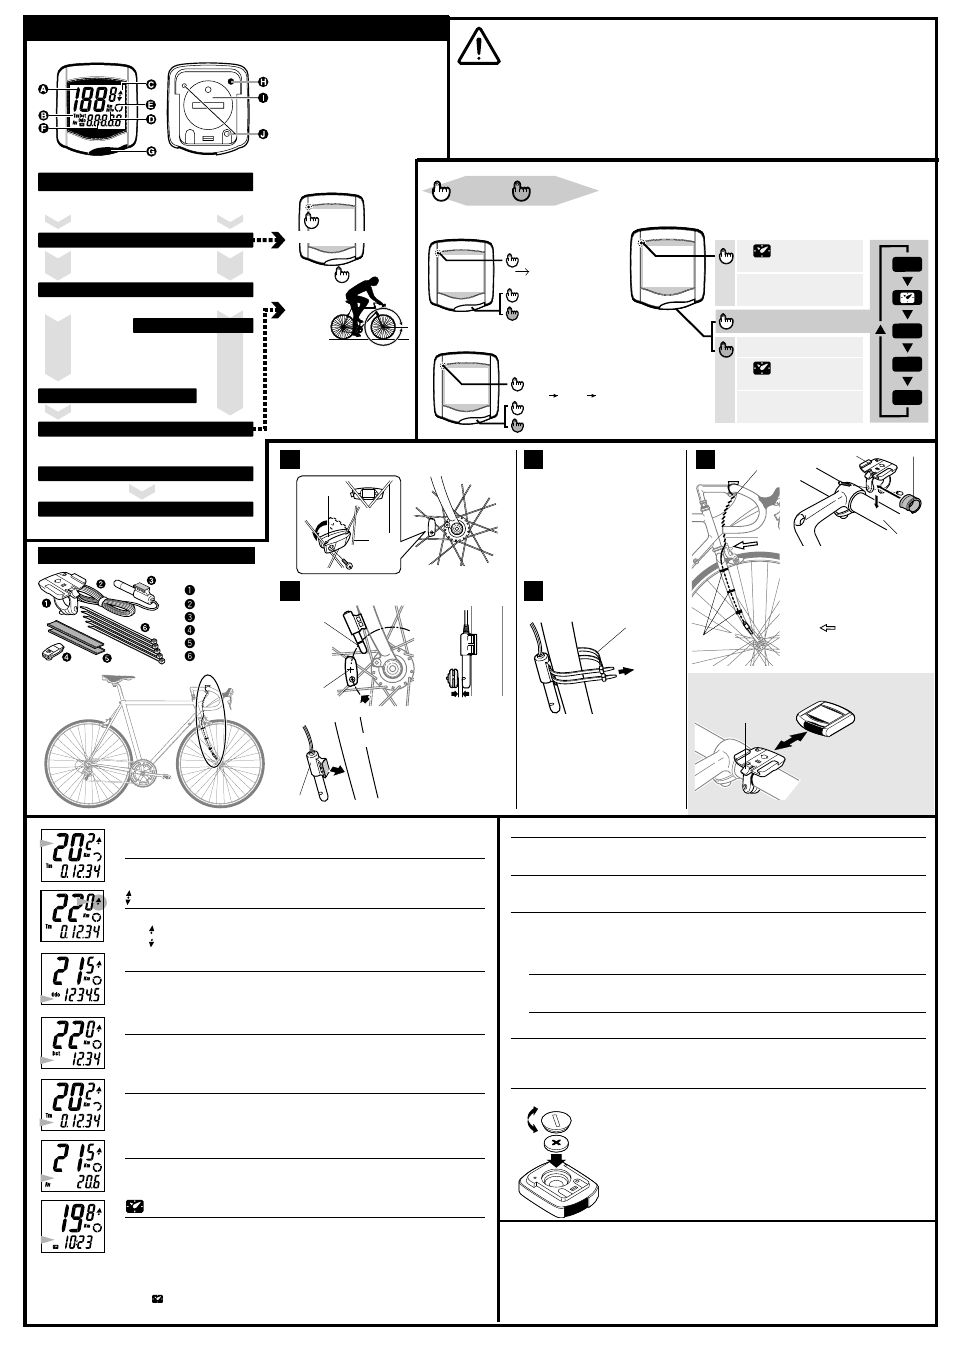 Operating instructions, Main unit preparation | CatEye CC-VL200 [Velo 2] User Manual | Page 2 / 2